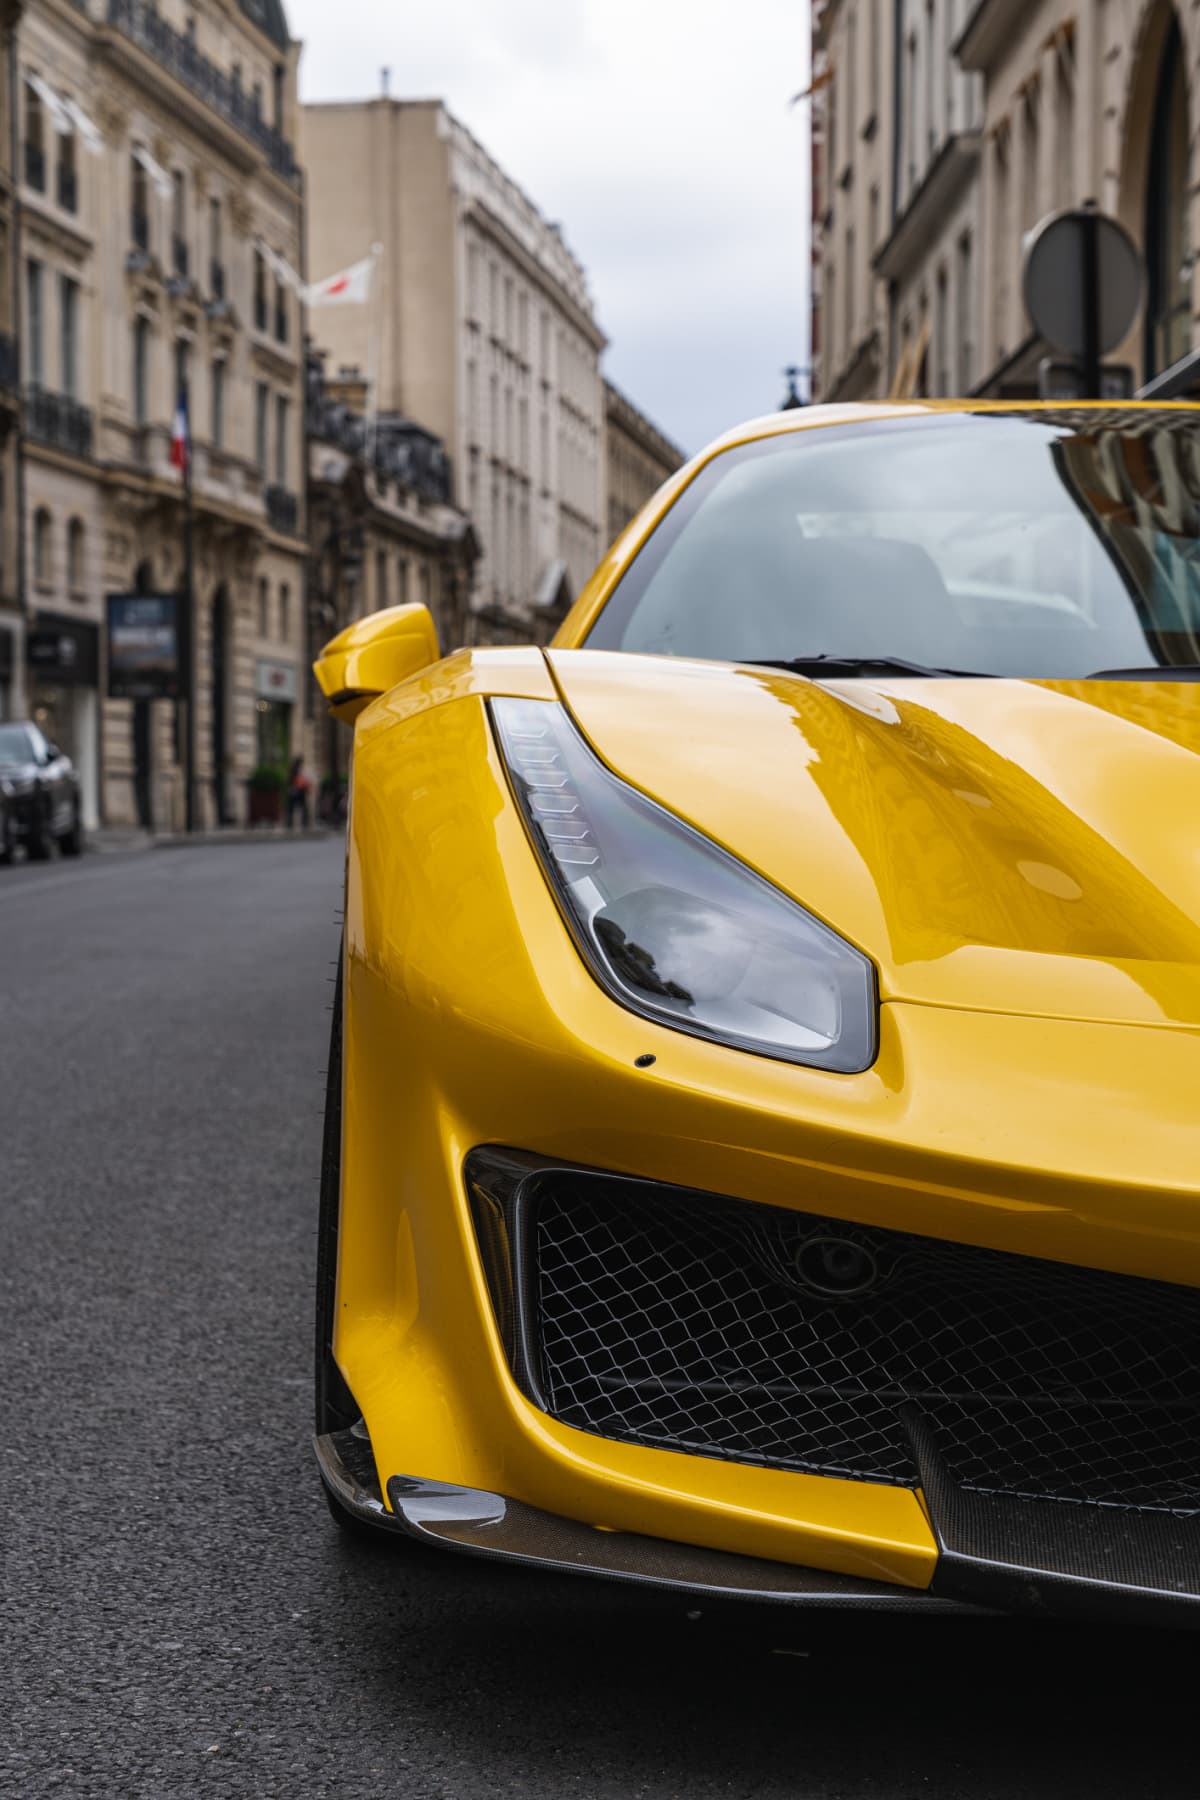 Paris, France - 06-05-2021: This Image shows a yellow Ferrari in Paris.